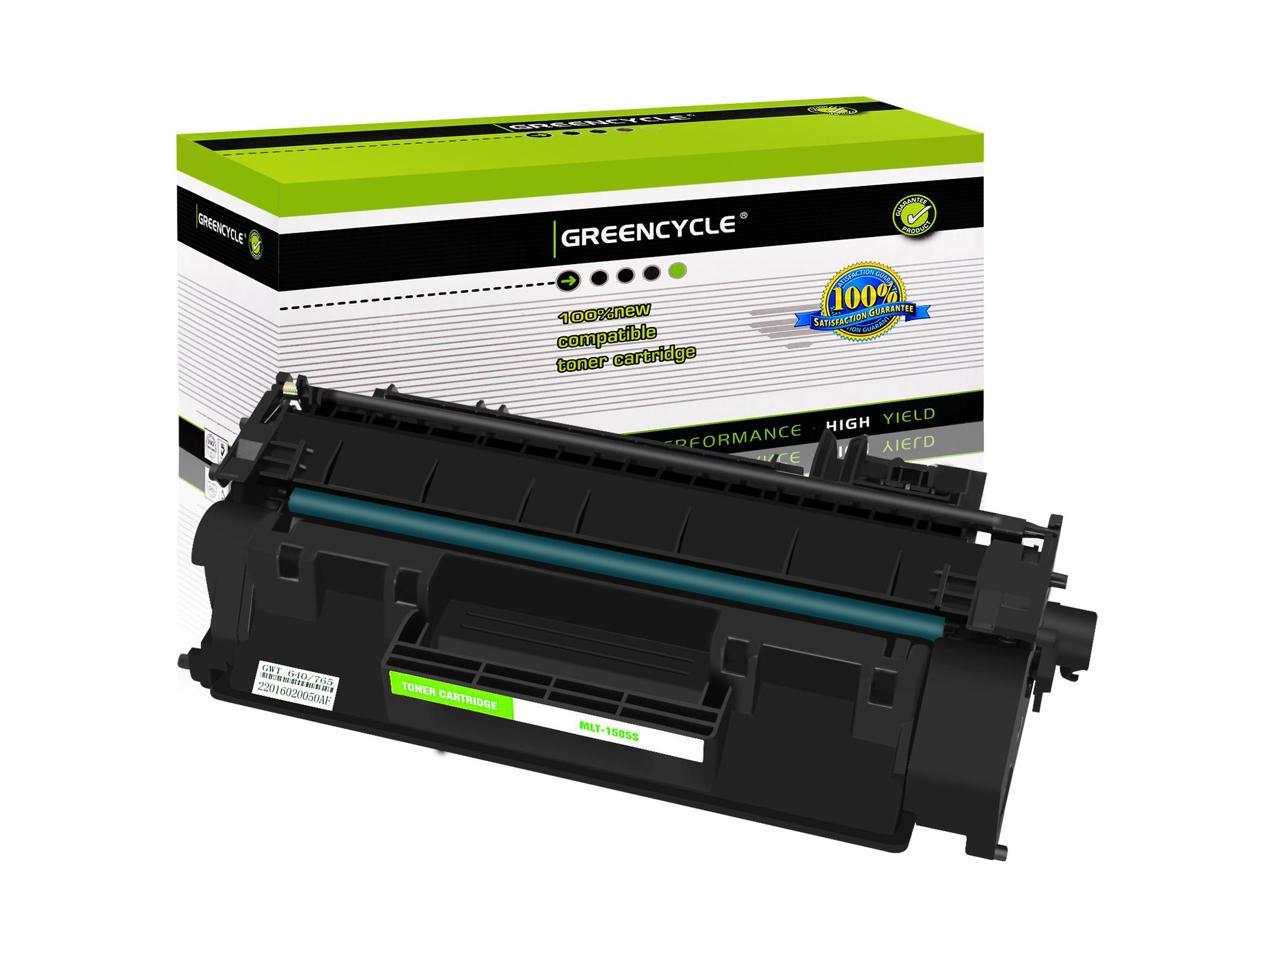 hp laserjet p2055dn printer replacement